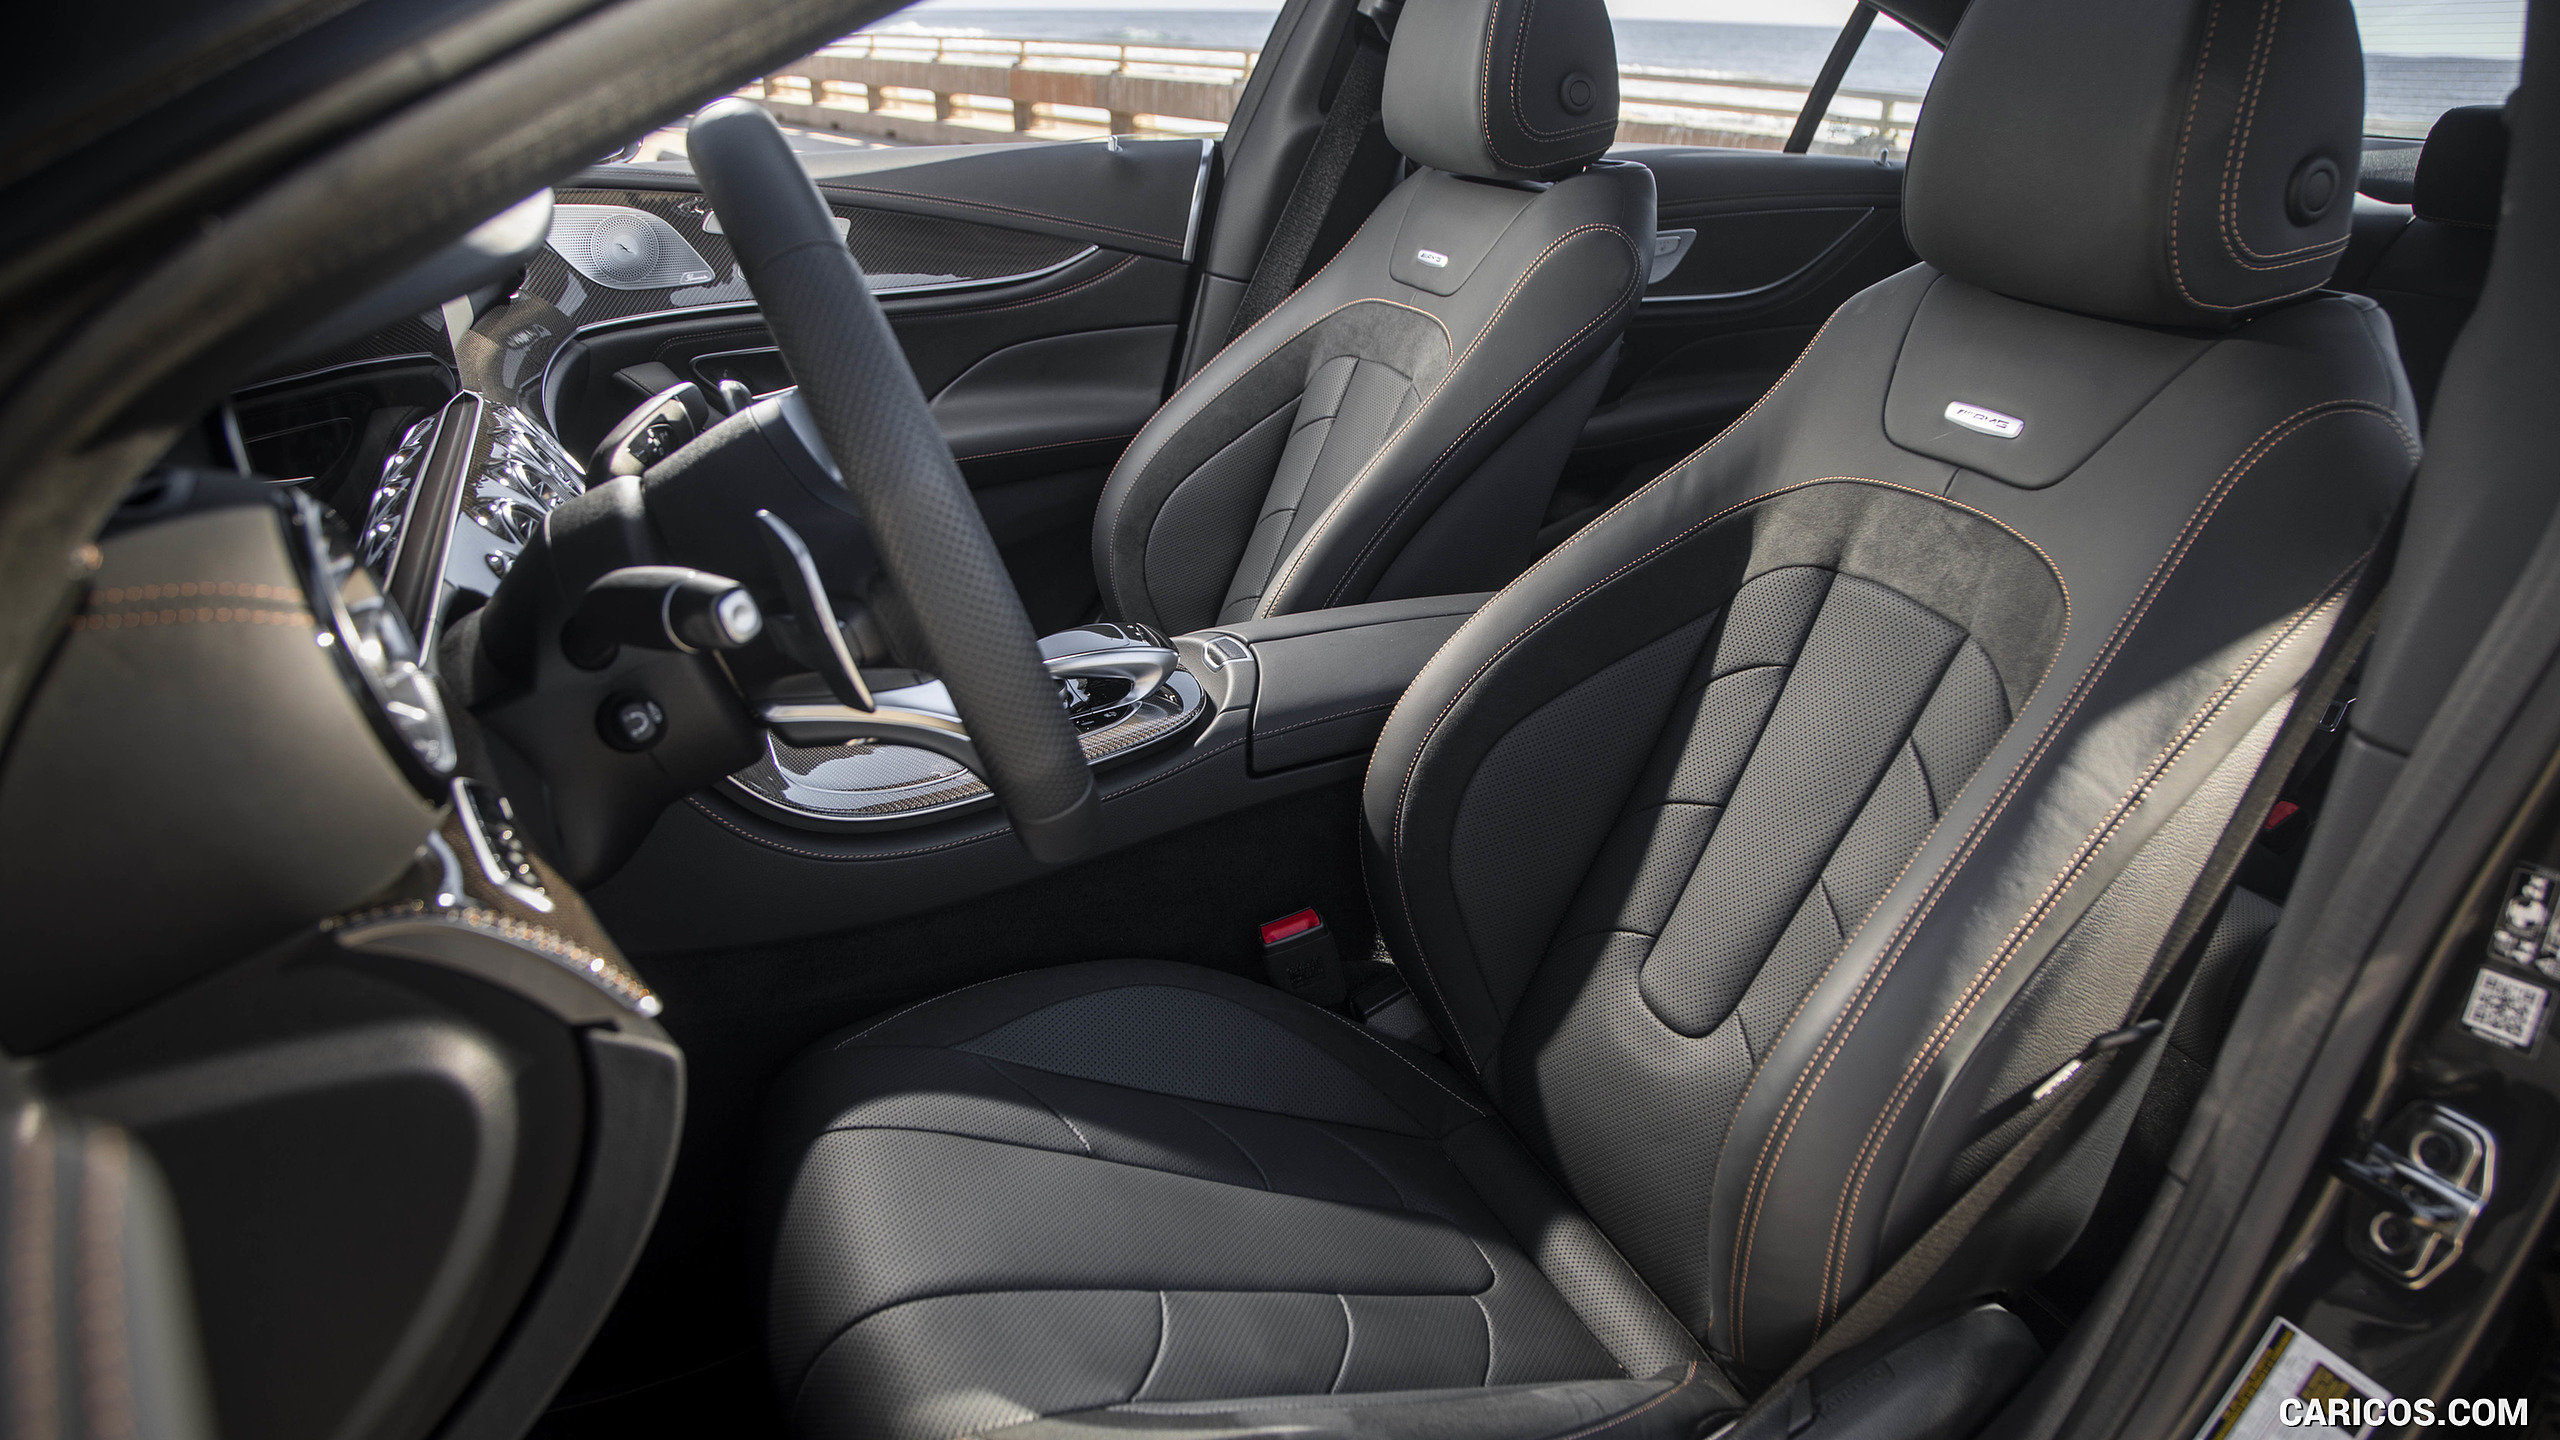 2019 Mercedes-AMG CLS 53 4MATIC+ (US-Spec) - Interior, Front Seats, #82 of 84